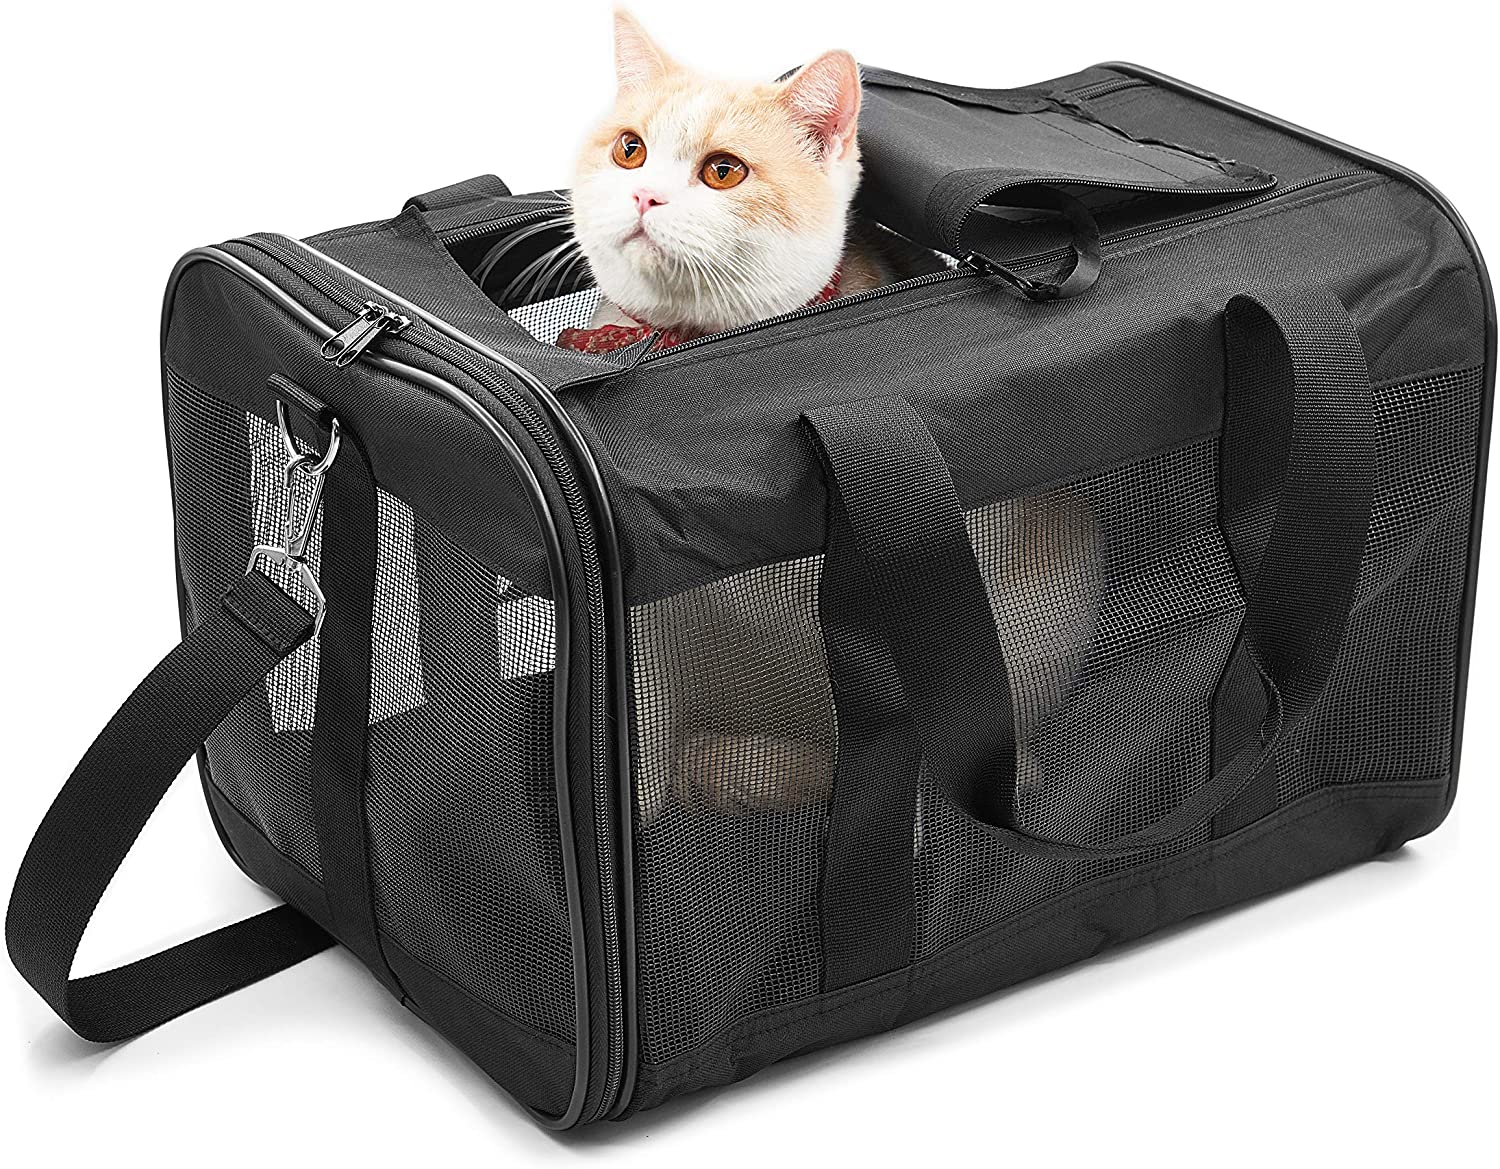 HITSLAM Pet Carrier Cat Carrier Soft Sided Pet Travel Carrier for